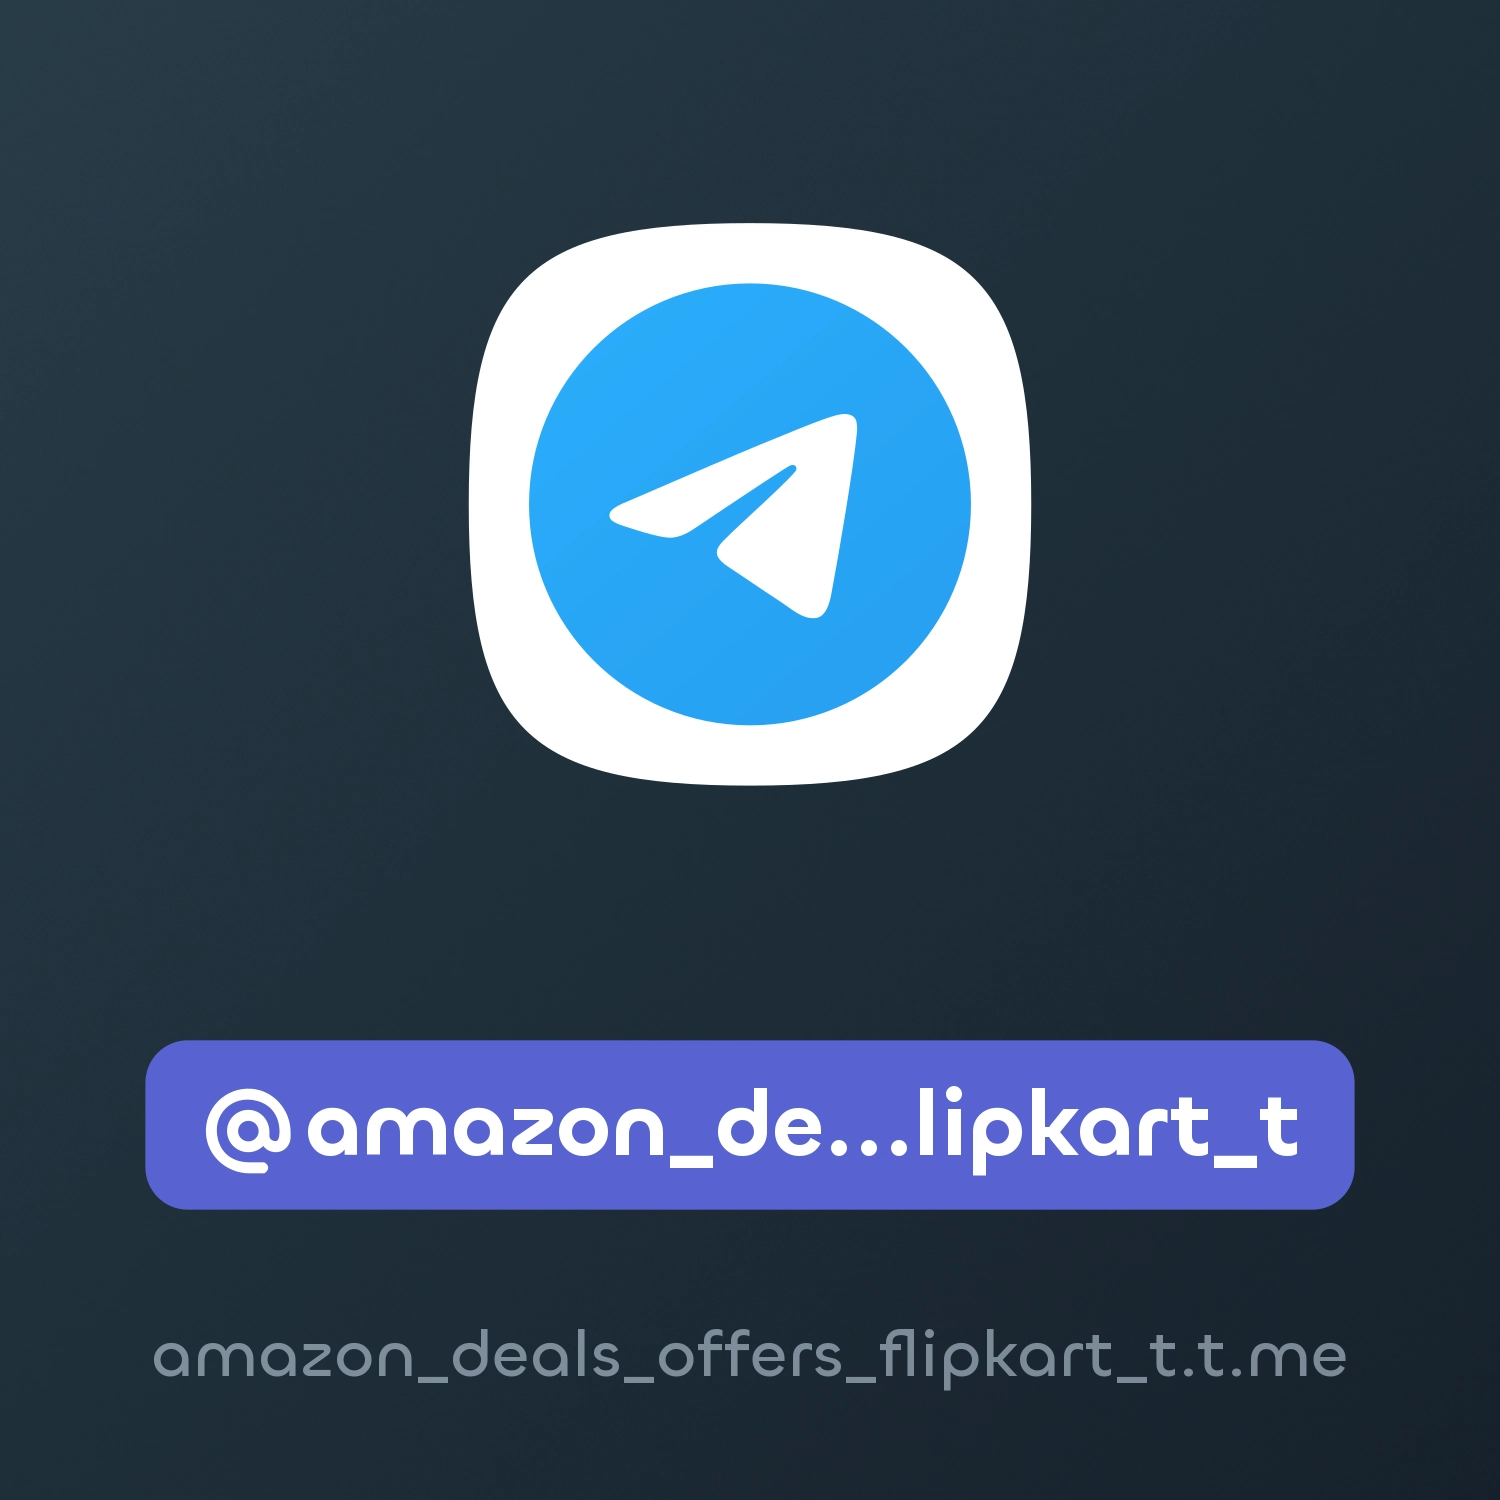 @amazon_deals_offers_flipkart_t